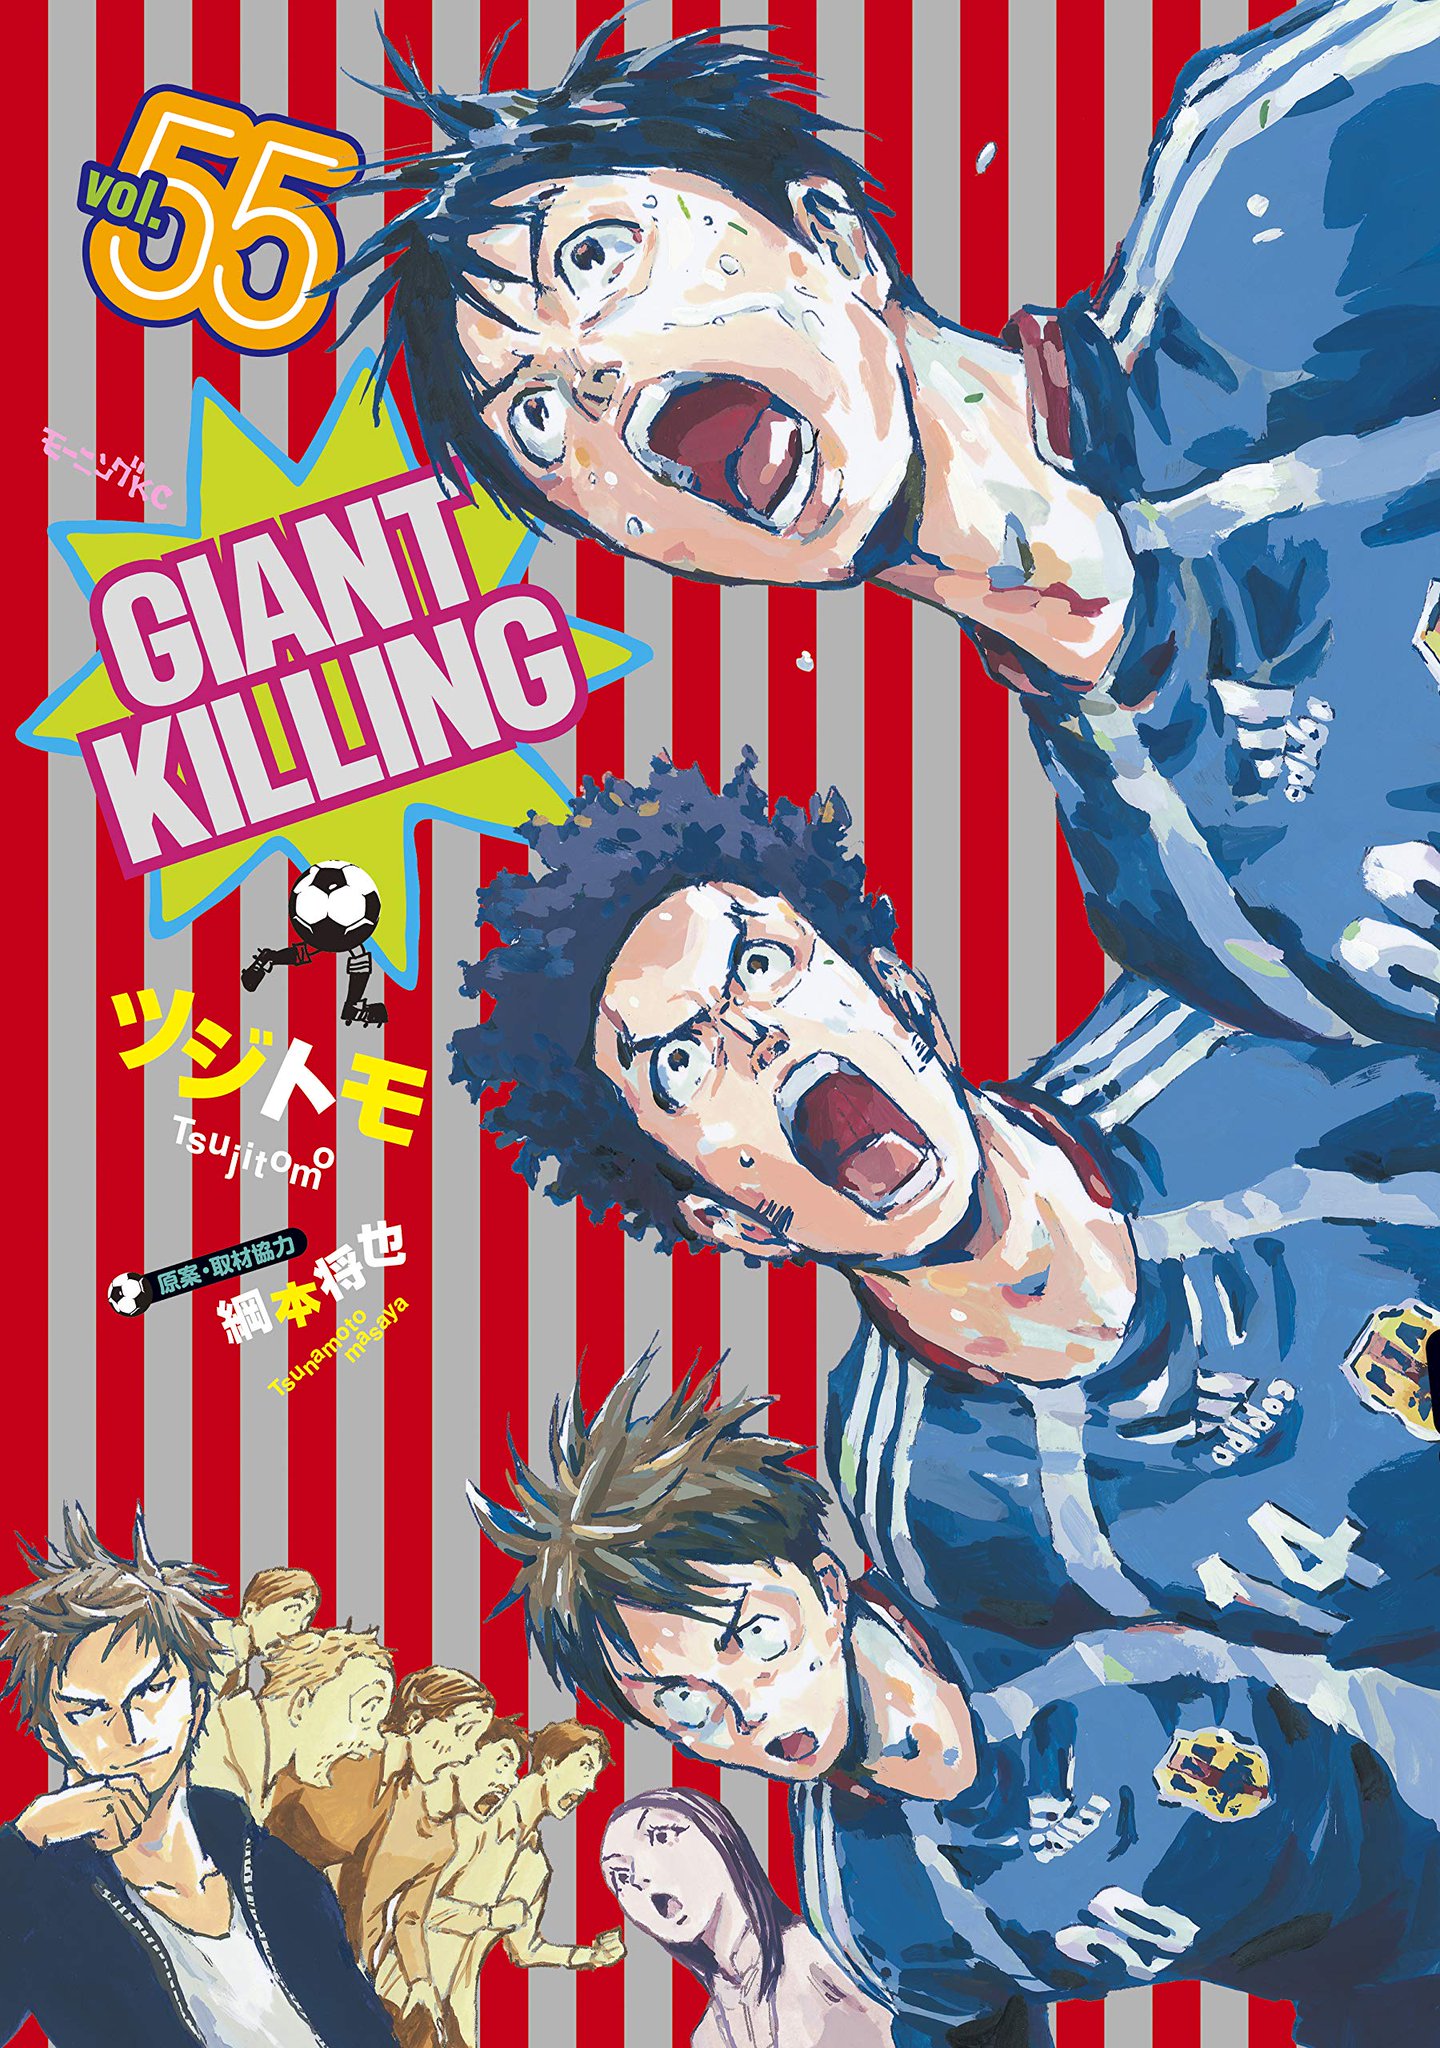 GIANT KILLING 11 (Giant Killing, #11) by Masaya Tsunamoto